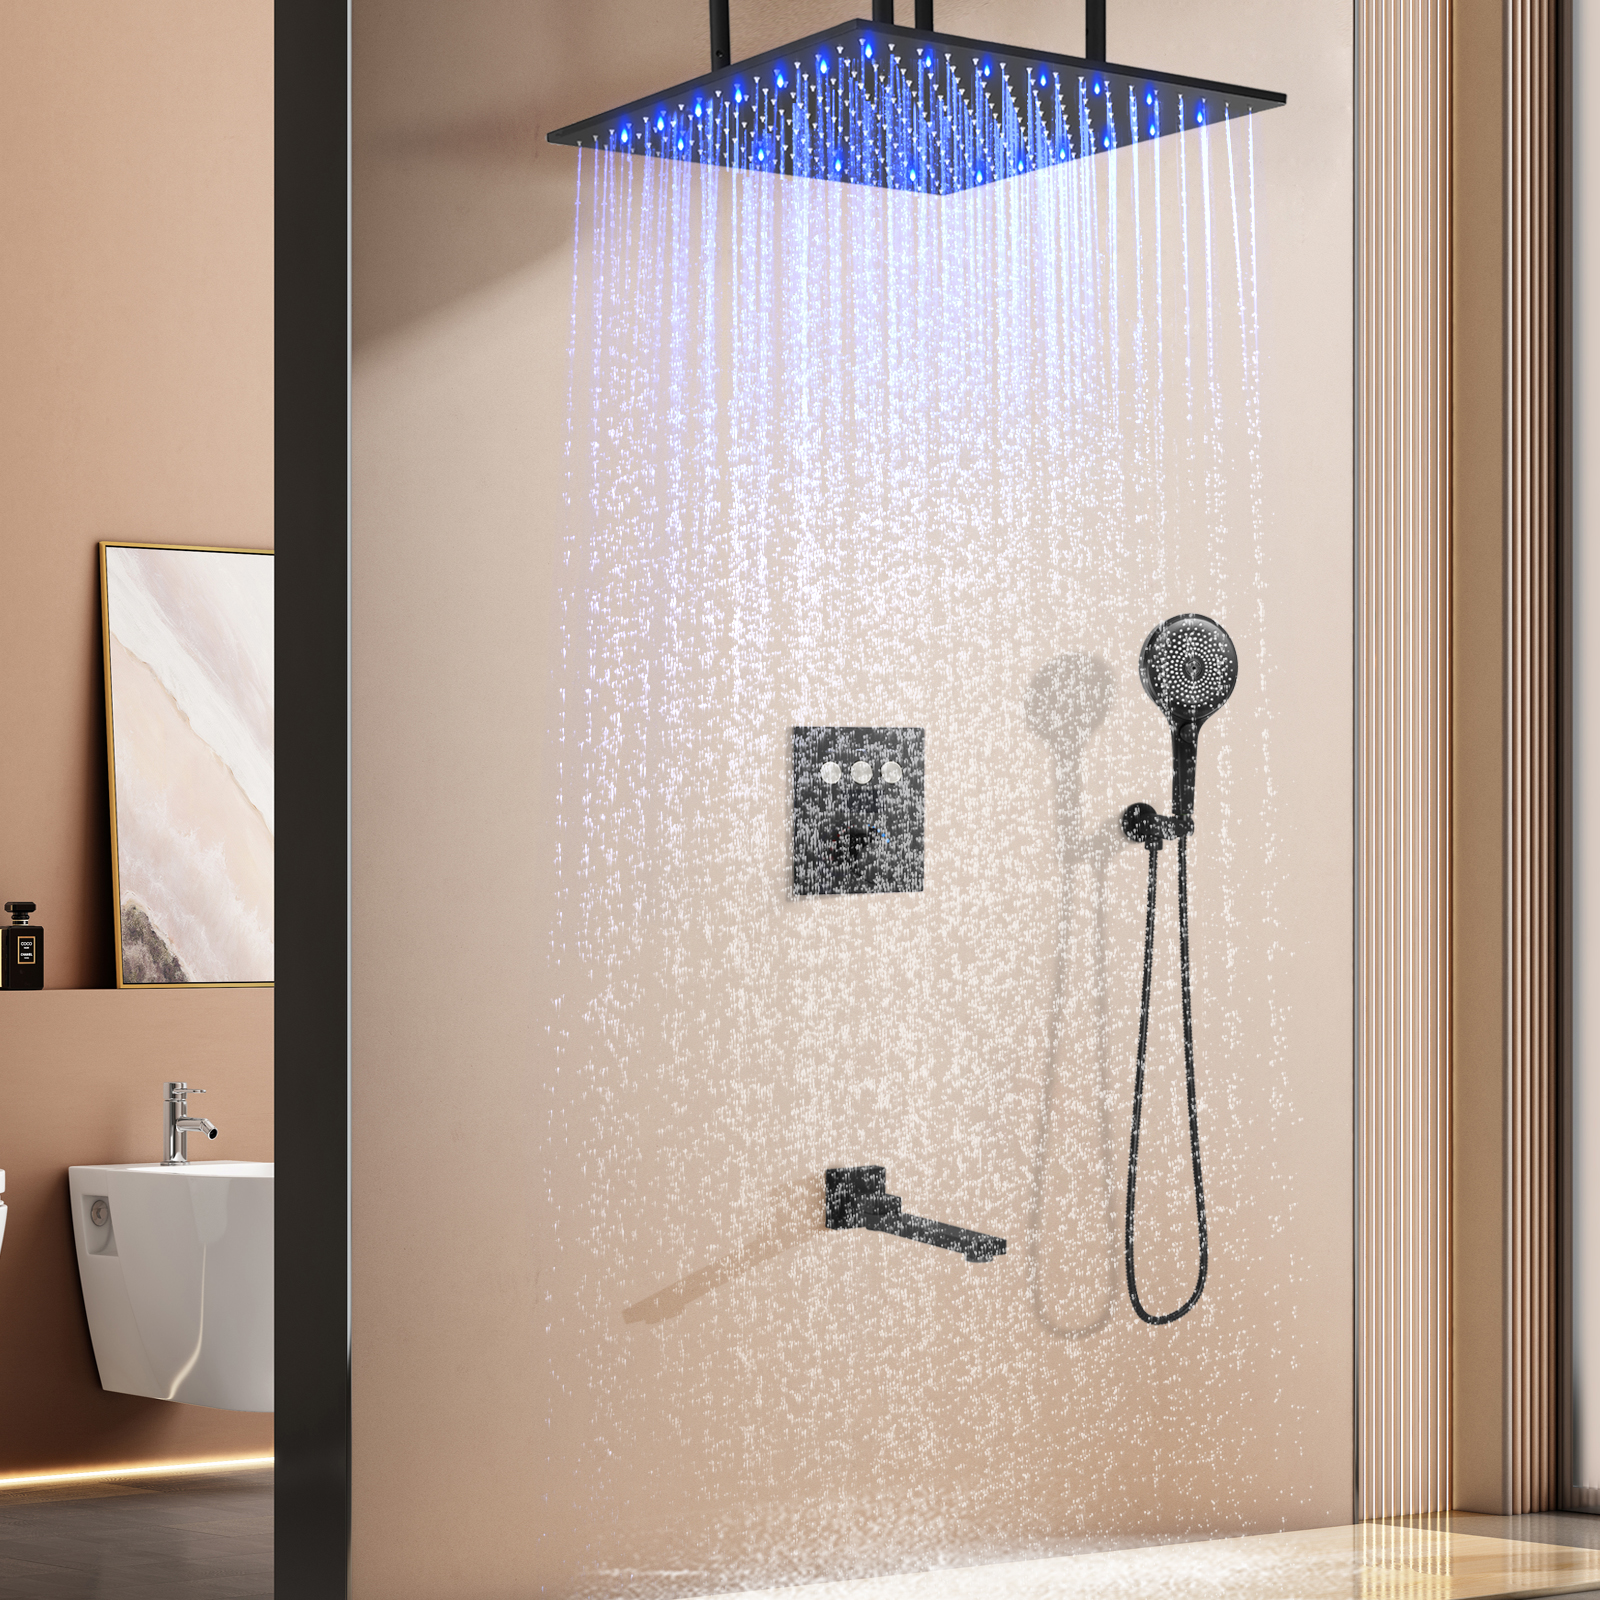 Juego de cabezal de ducha LED - Cabezal de ducha de acero inoxidable